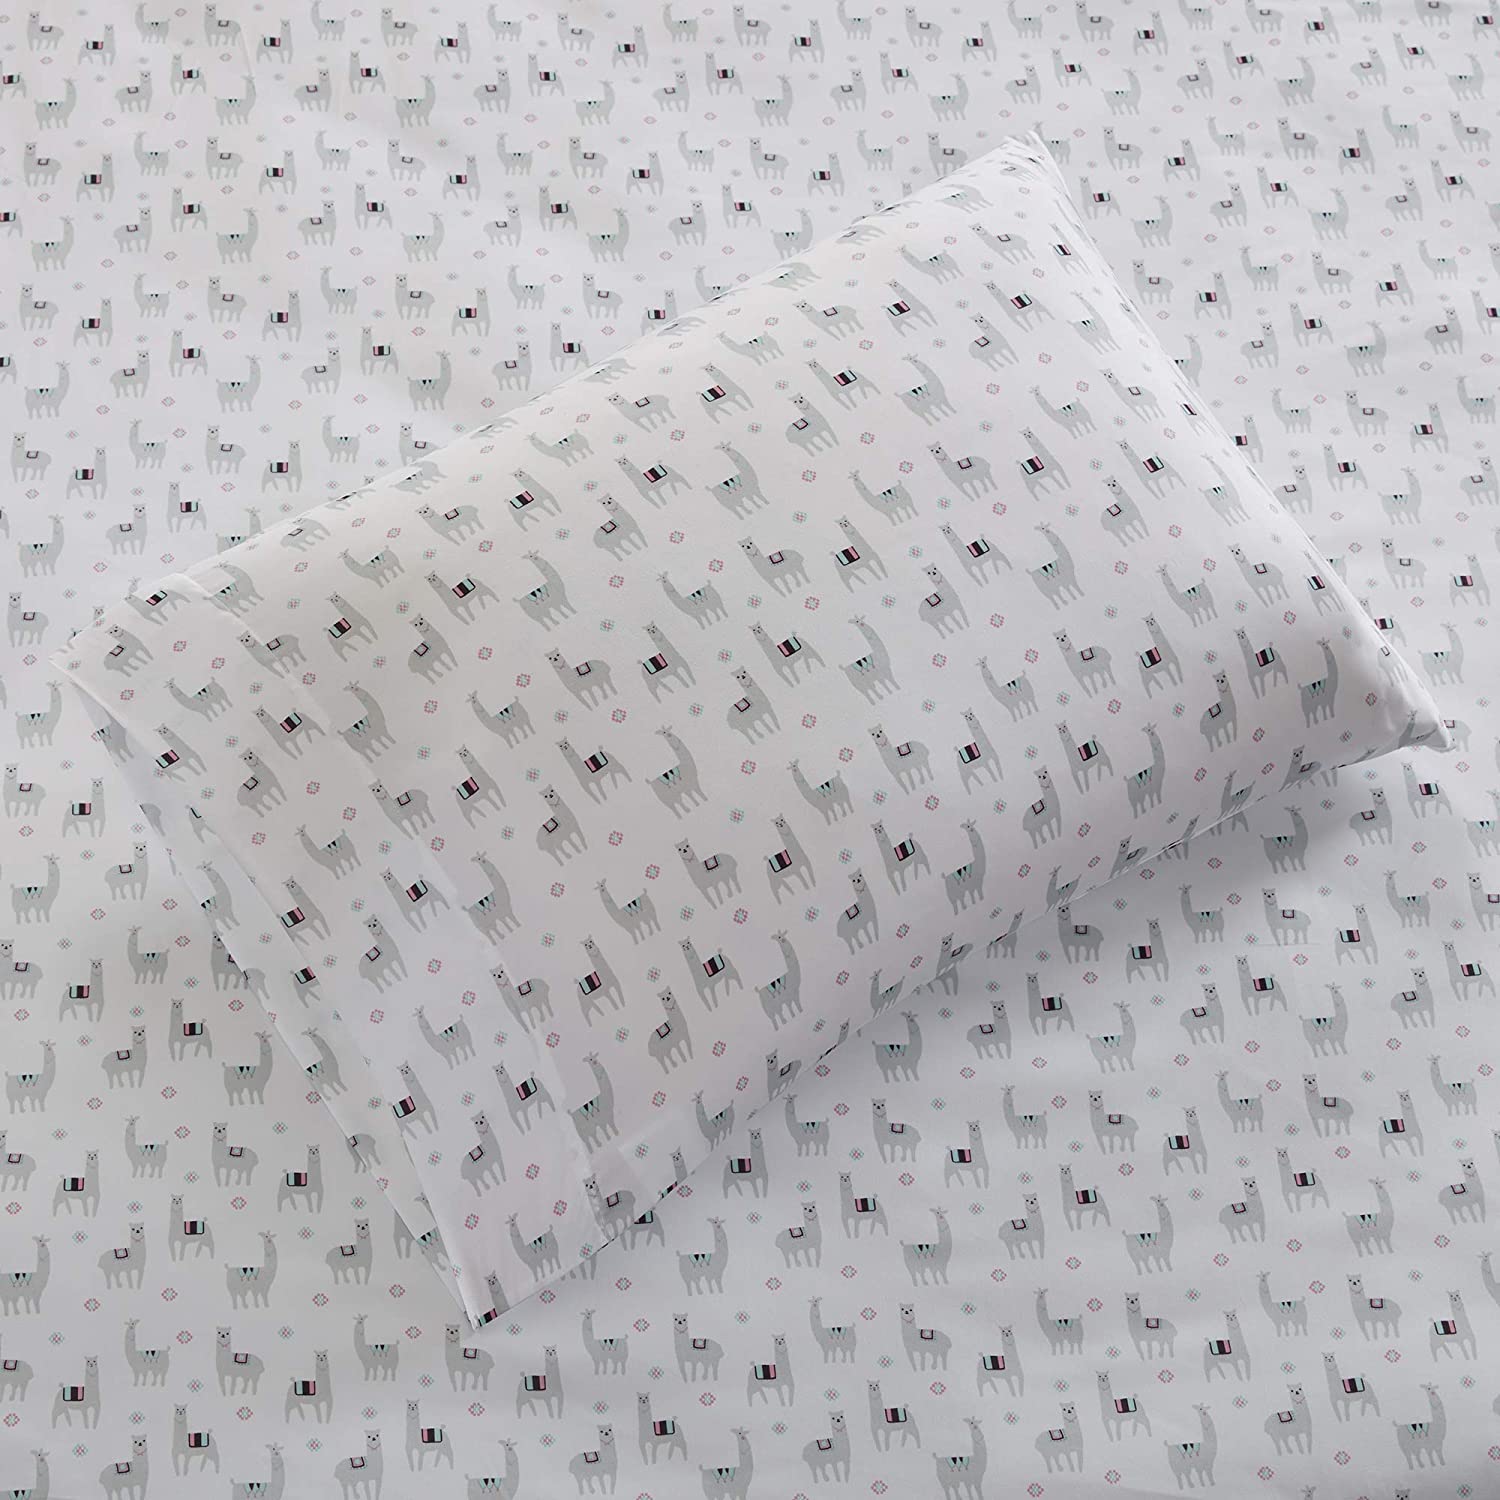 Intelligent Design Microfiber Wrinkle Resistant, Soft Sheets with 12" Pocket Modern, All Season, Cozy Bedding-Set, Matching Pillow Case, Full, Novelty Grey Llamas